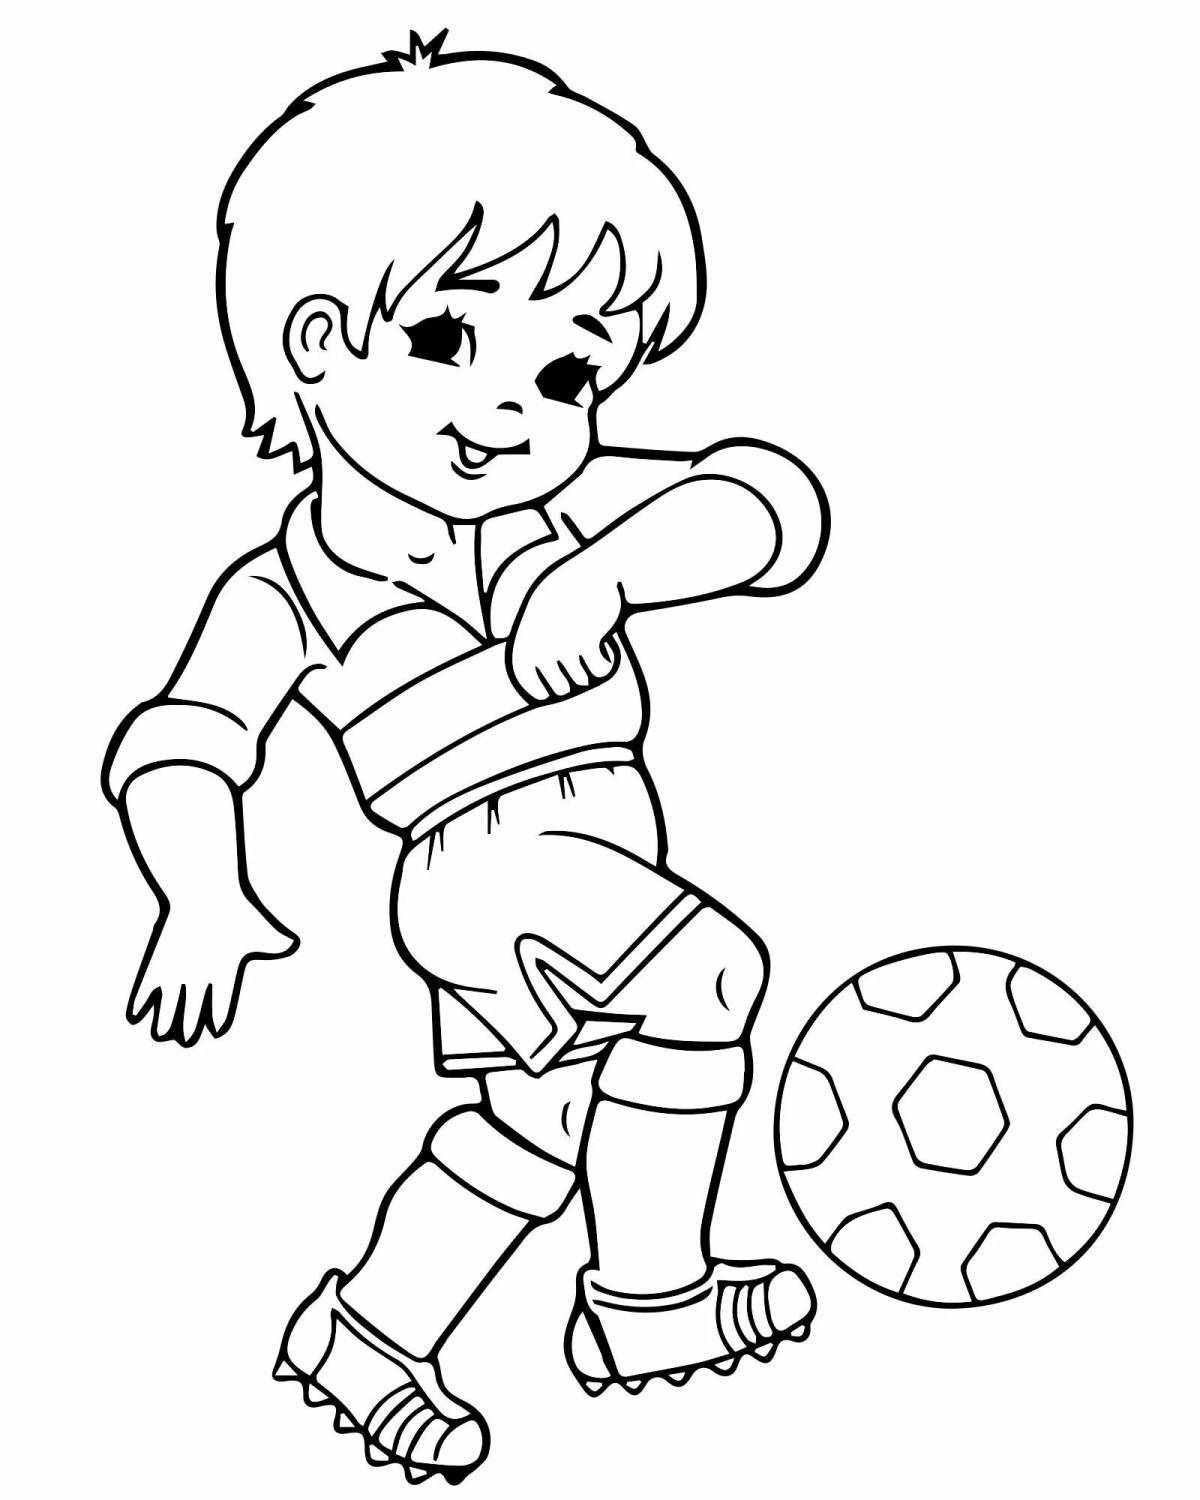 Superb sports coloring page для детей 5-6 лет